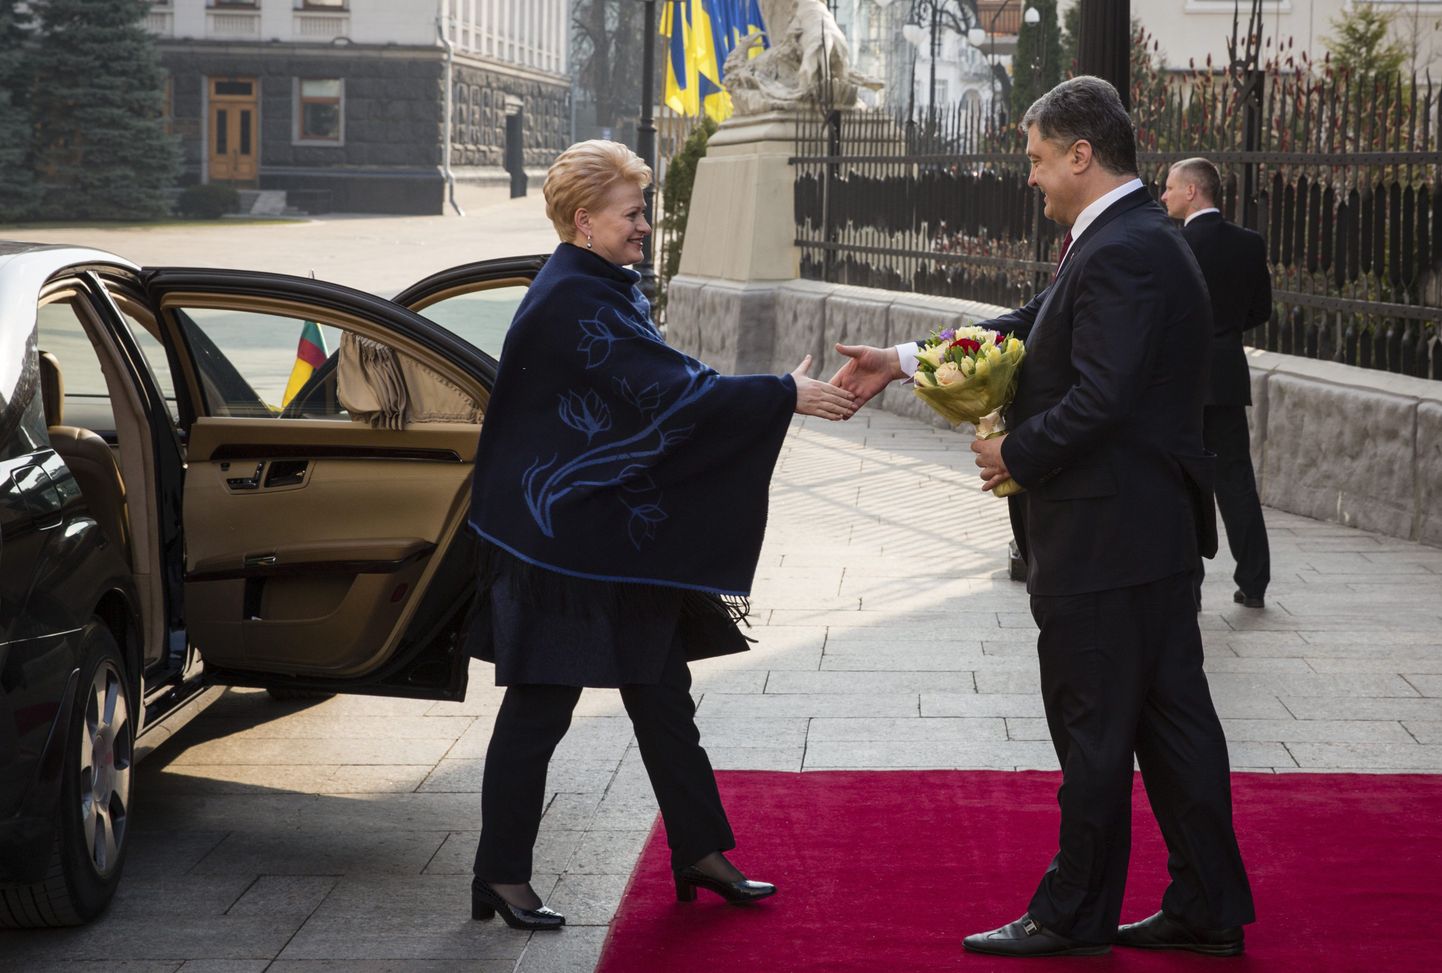 Ukraine's President Petro Poroshenko, right, welcomes Lithuania's President Dalia Grybauskaite in Kiev, Ukraine on Saturday, March 21, 2015. (AP Photo/Mikhail Palinchak, pool)